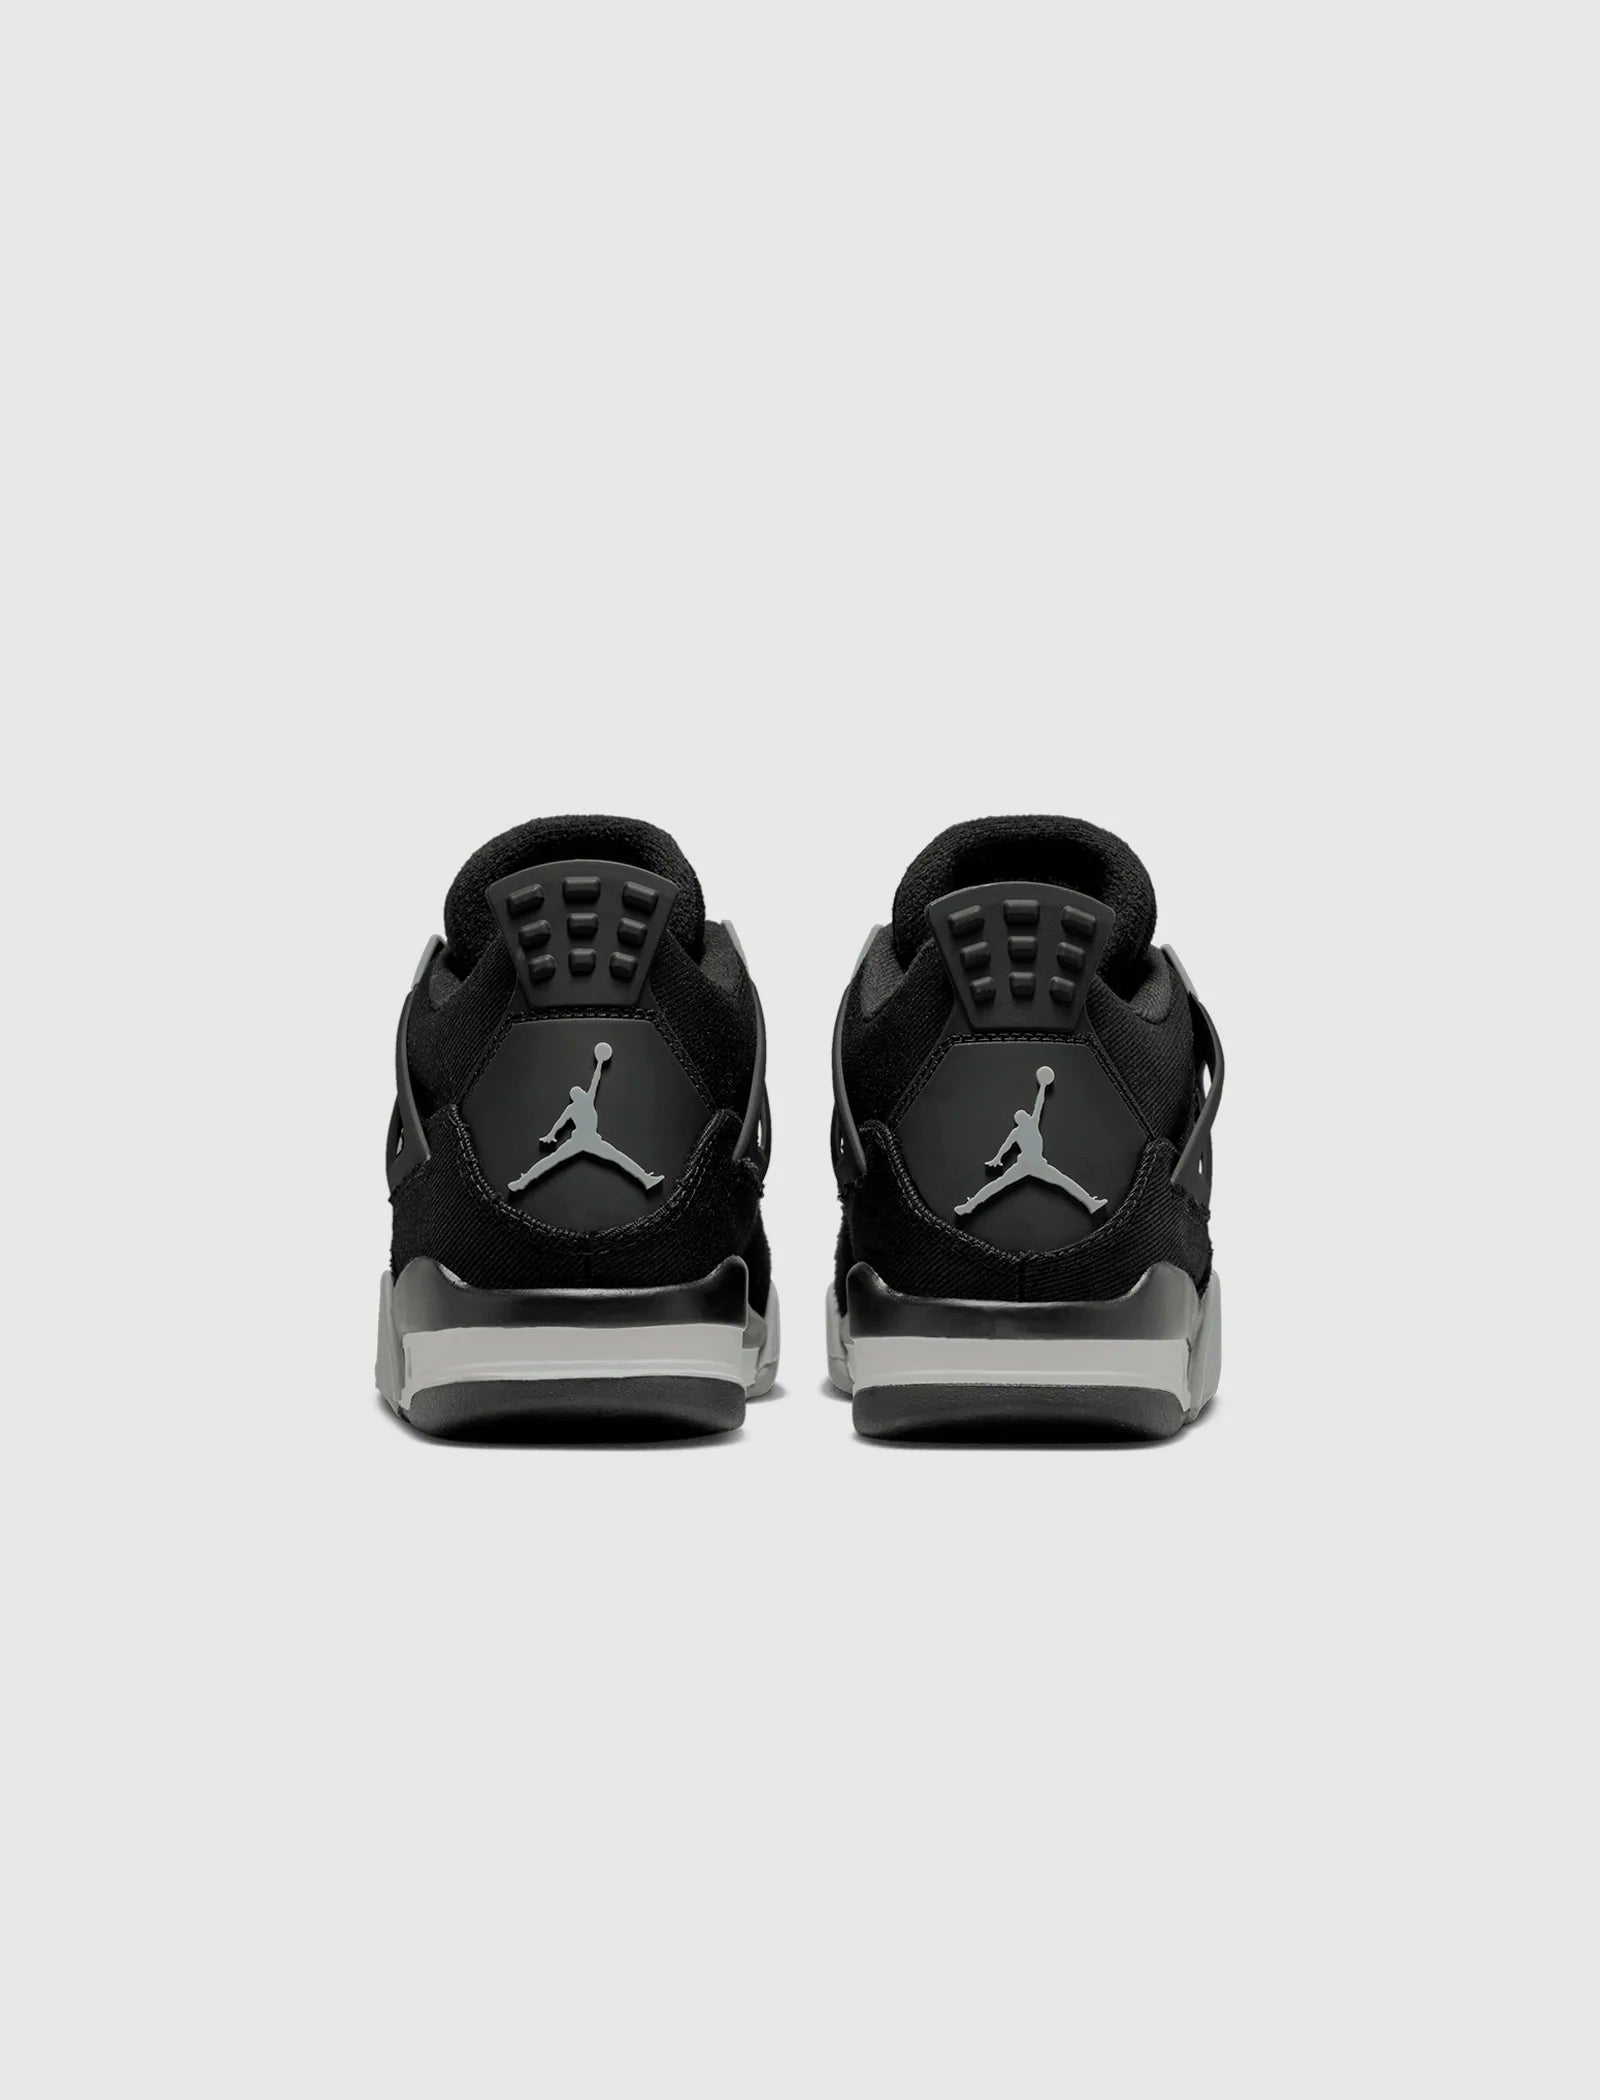 Jordan 4 Black Canvas (GS)